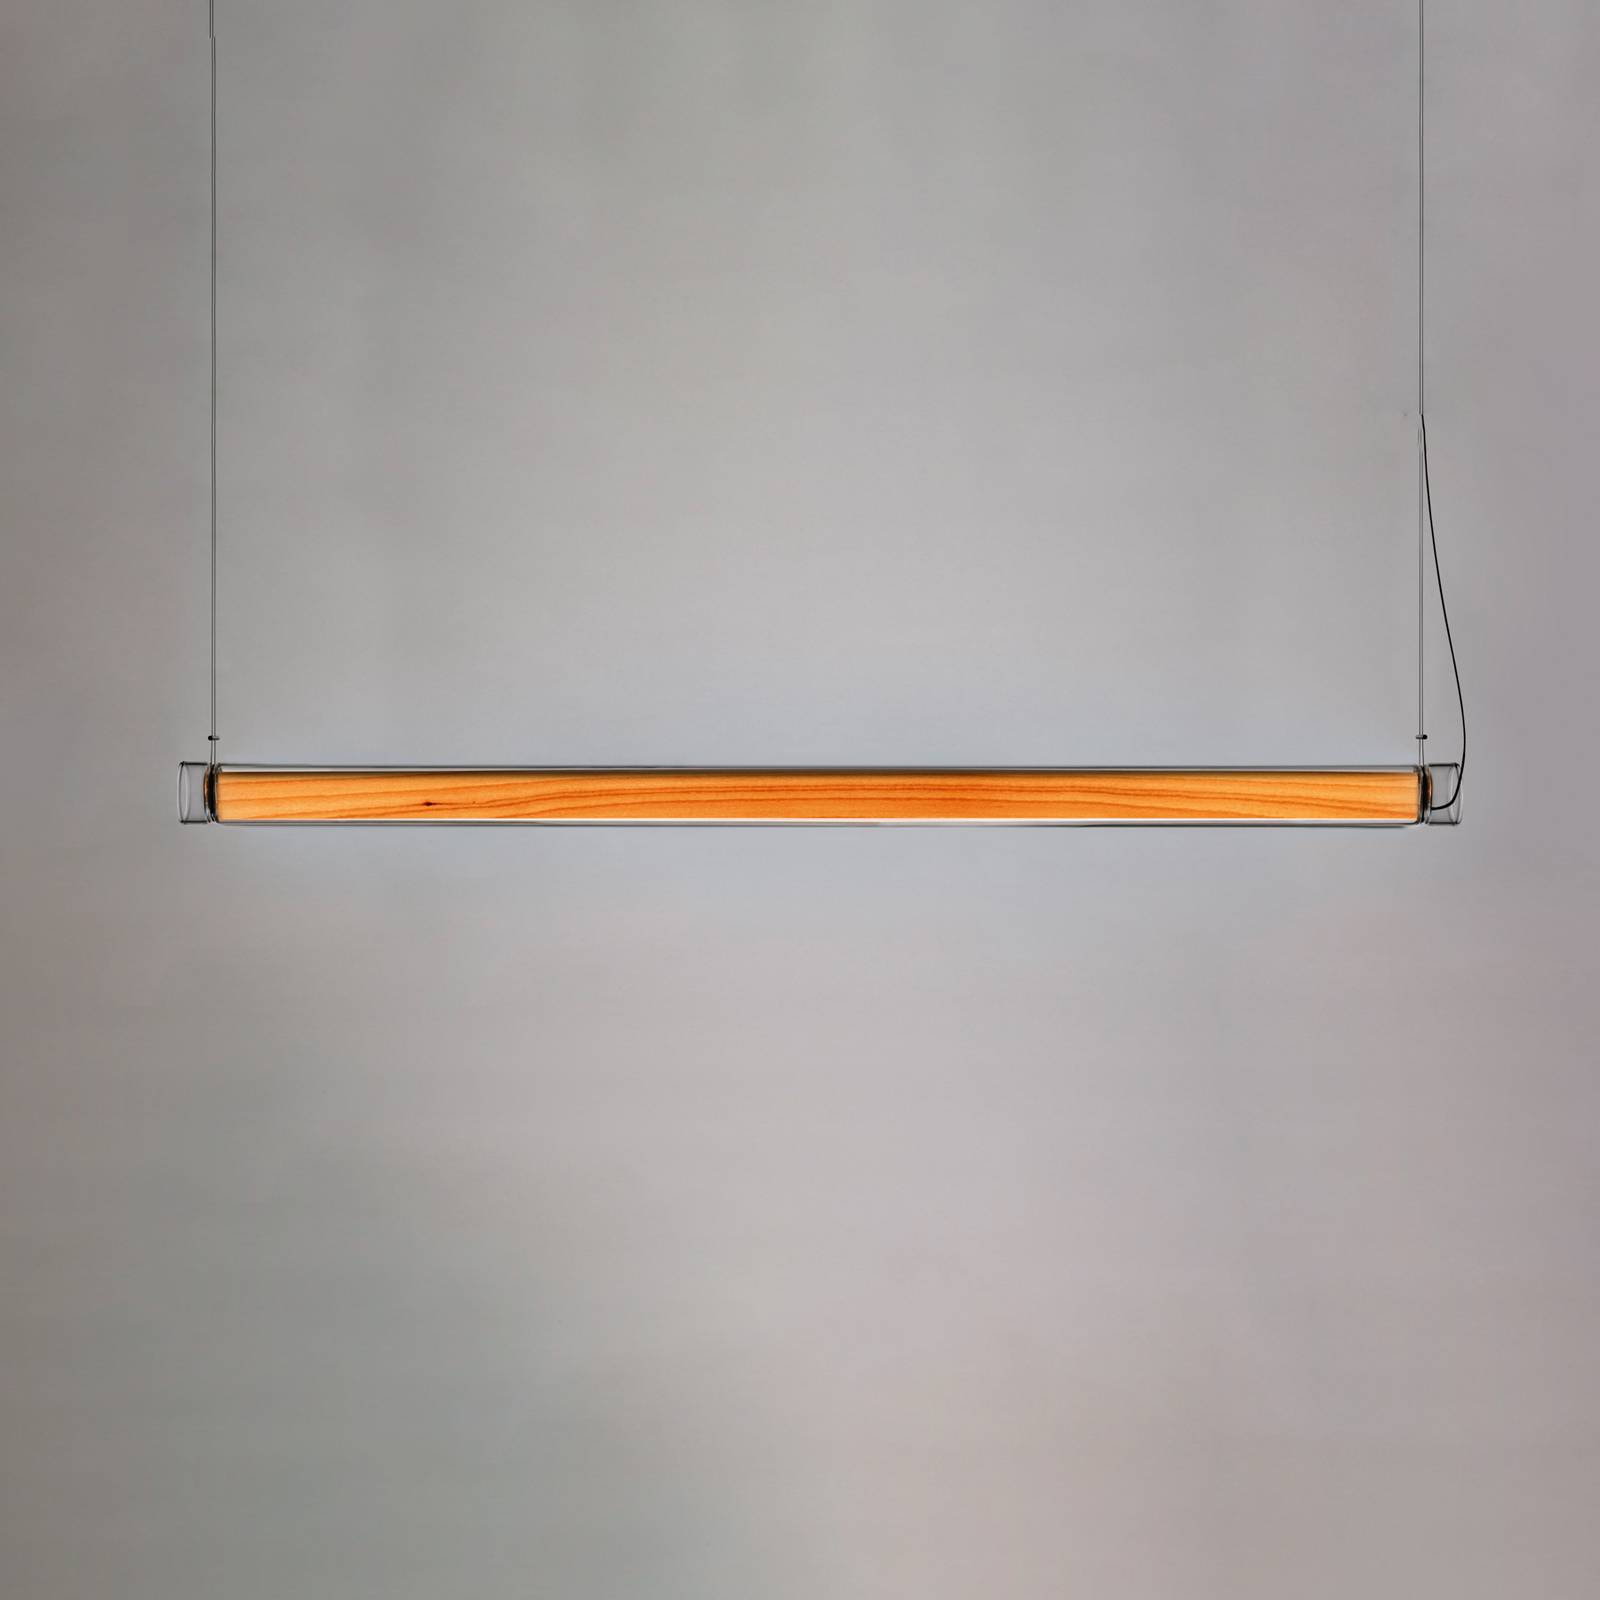 LZF Estela SH LED-Hängelampe, 120 cm, buche natur von LZF LamPS